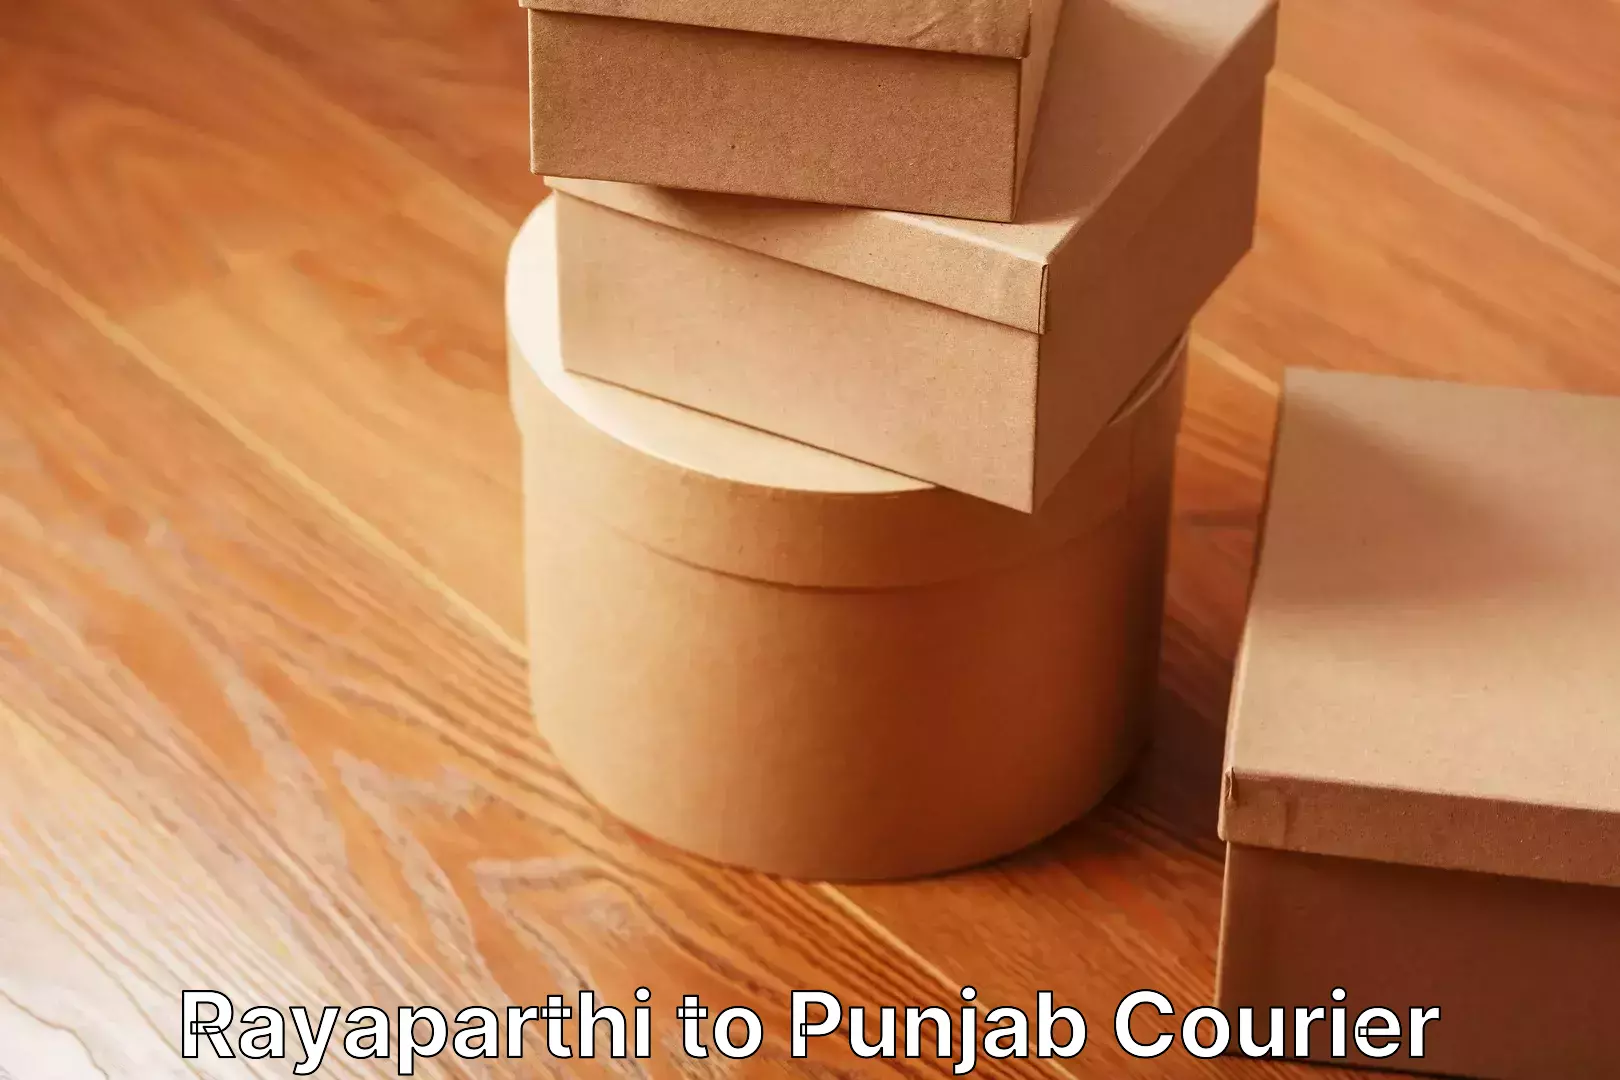 Trusted furniture movers Rayaparthi to Punjab